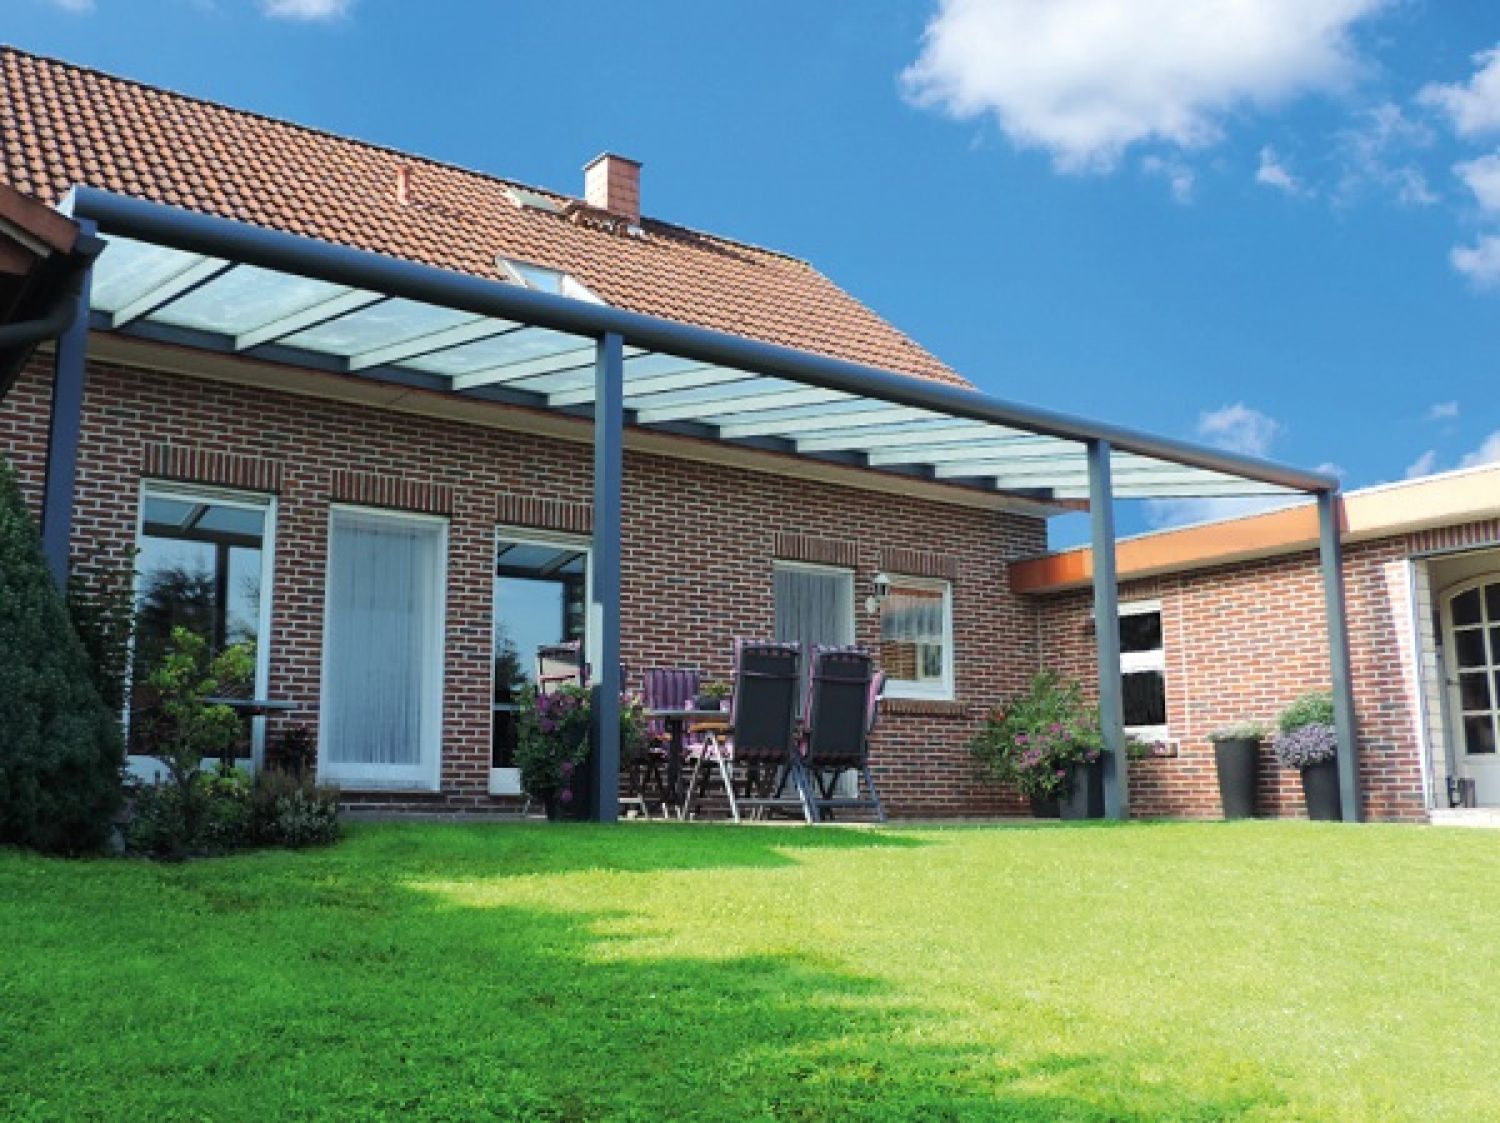 Profiline XXL veranda 1400x350 cm - polycarbonaat dak